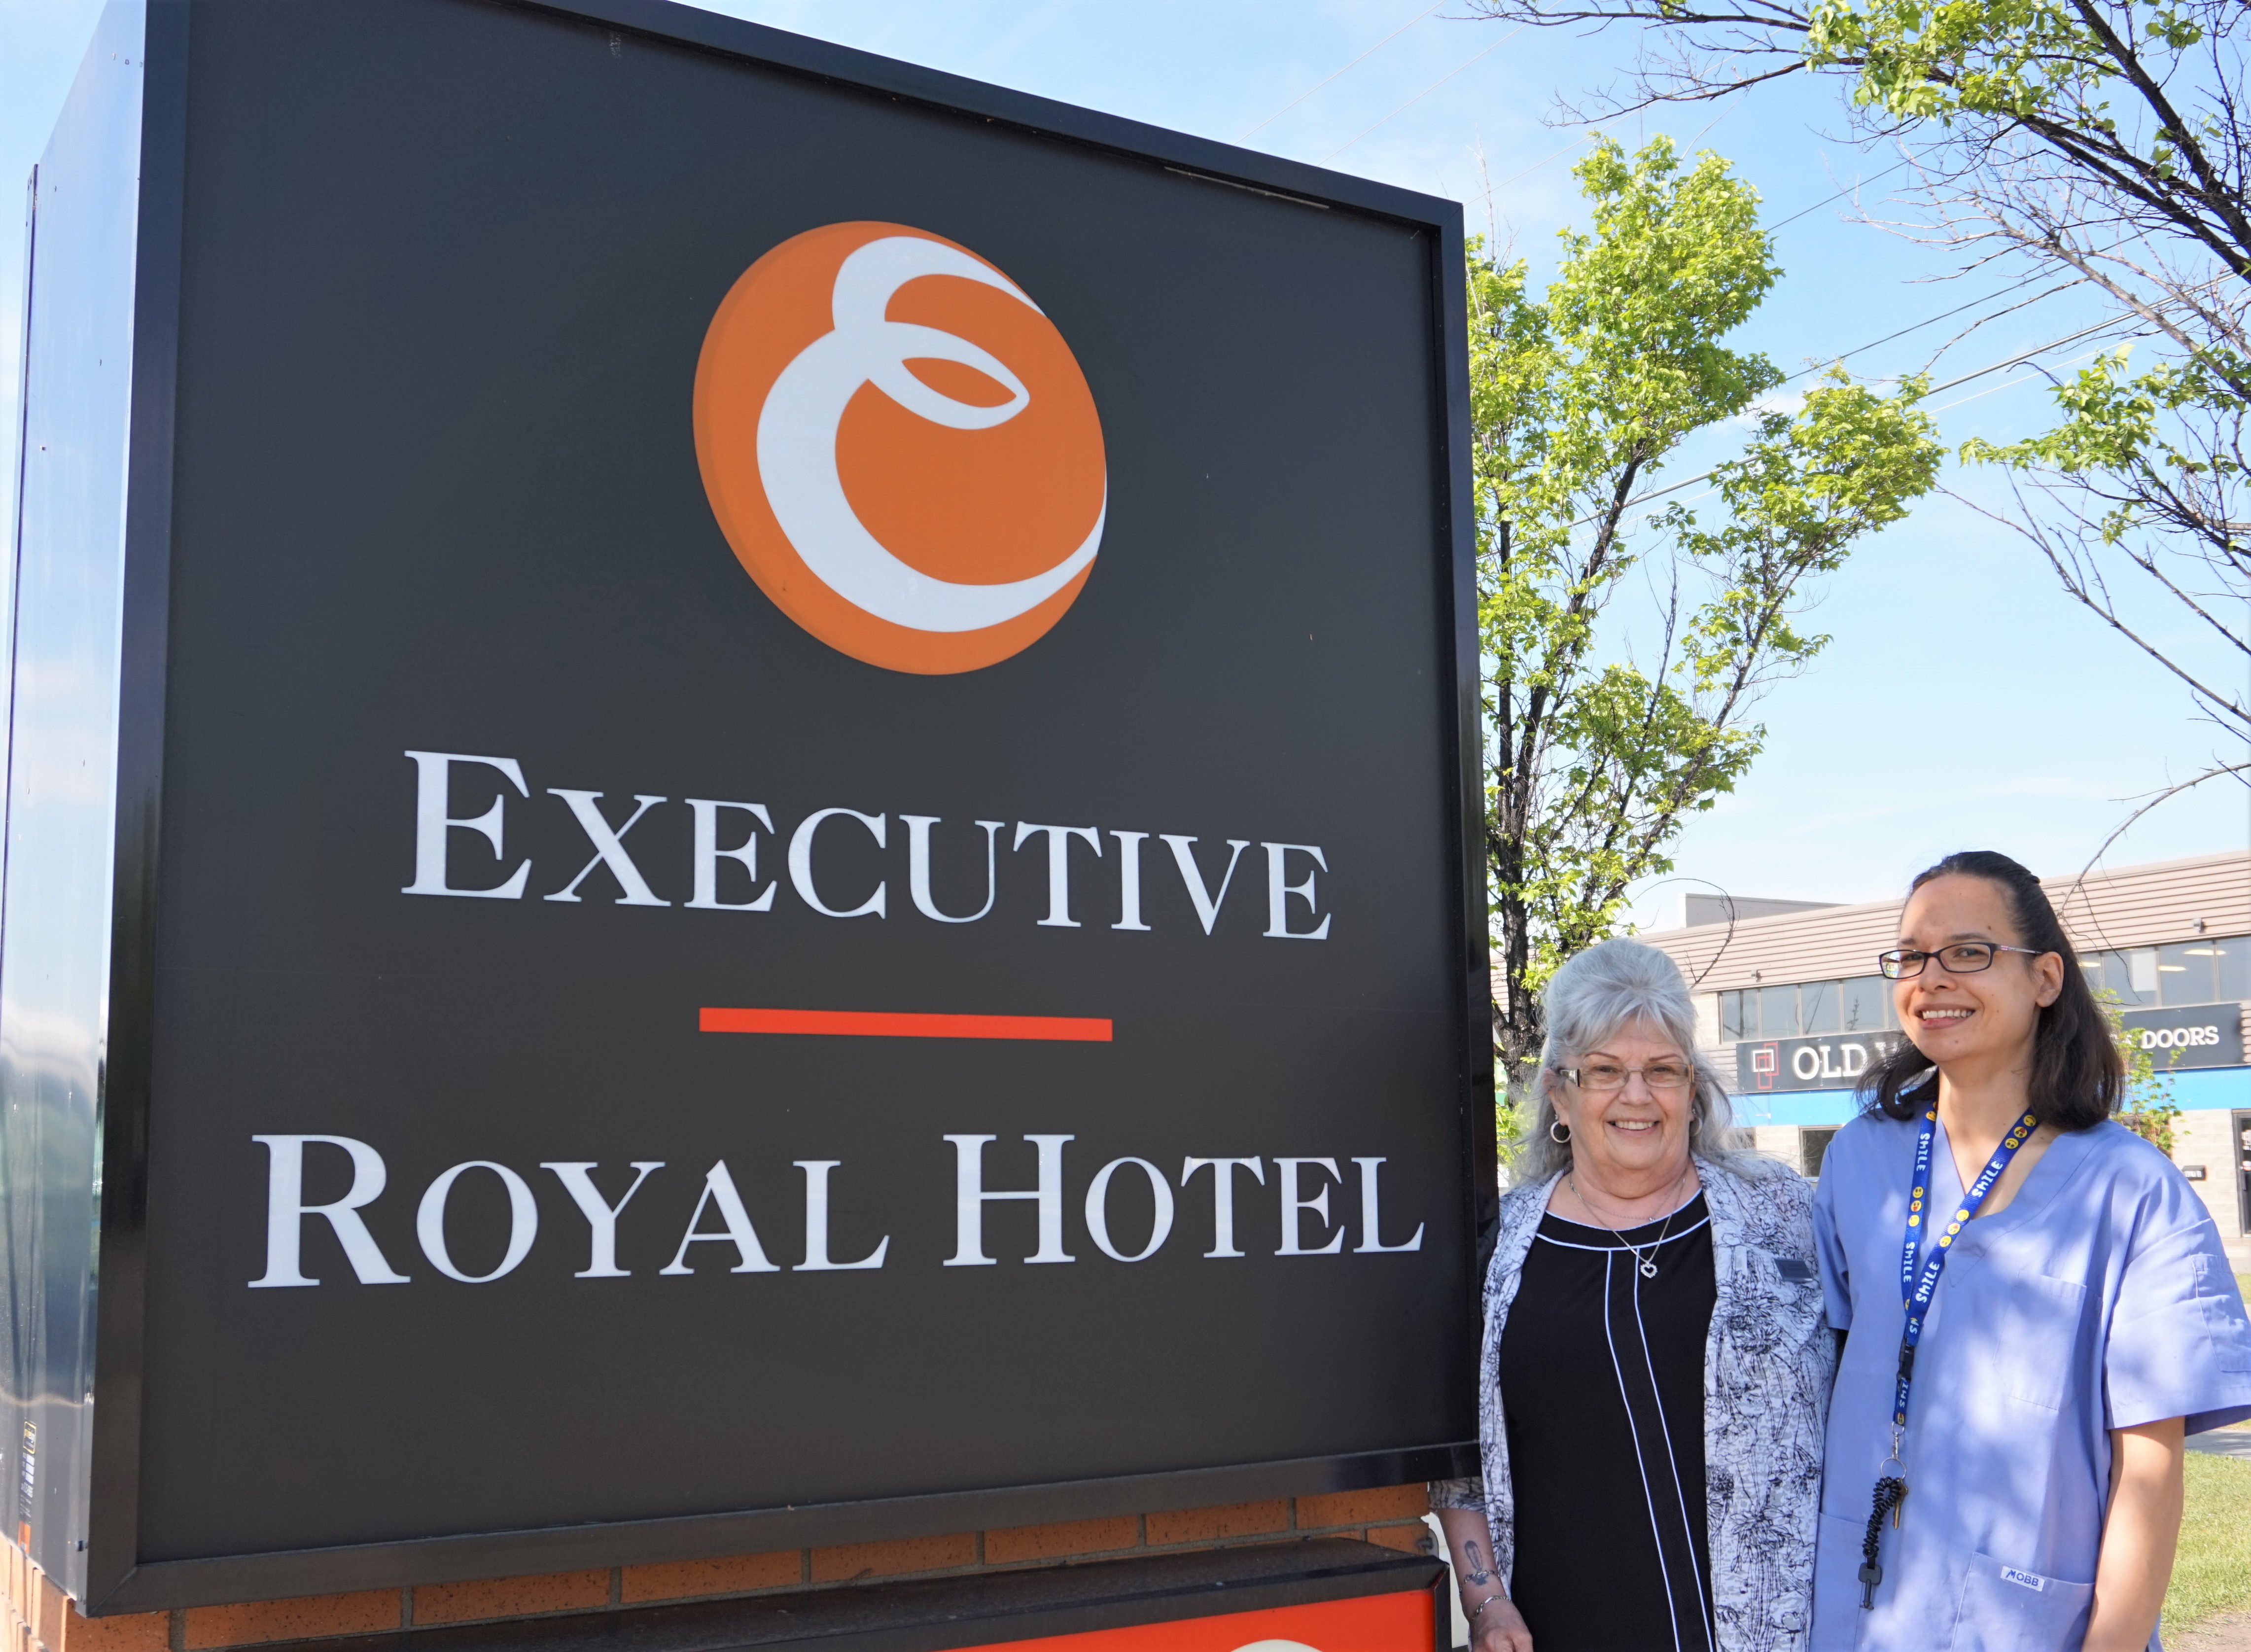 Executive Royal Hotel